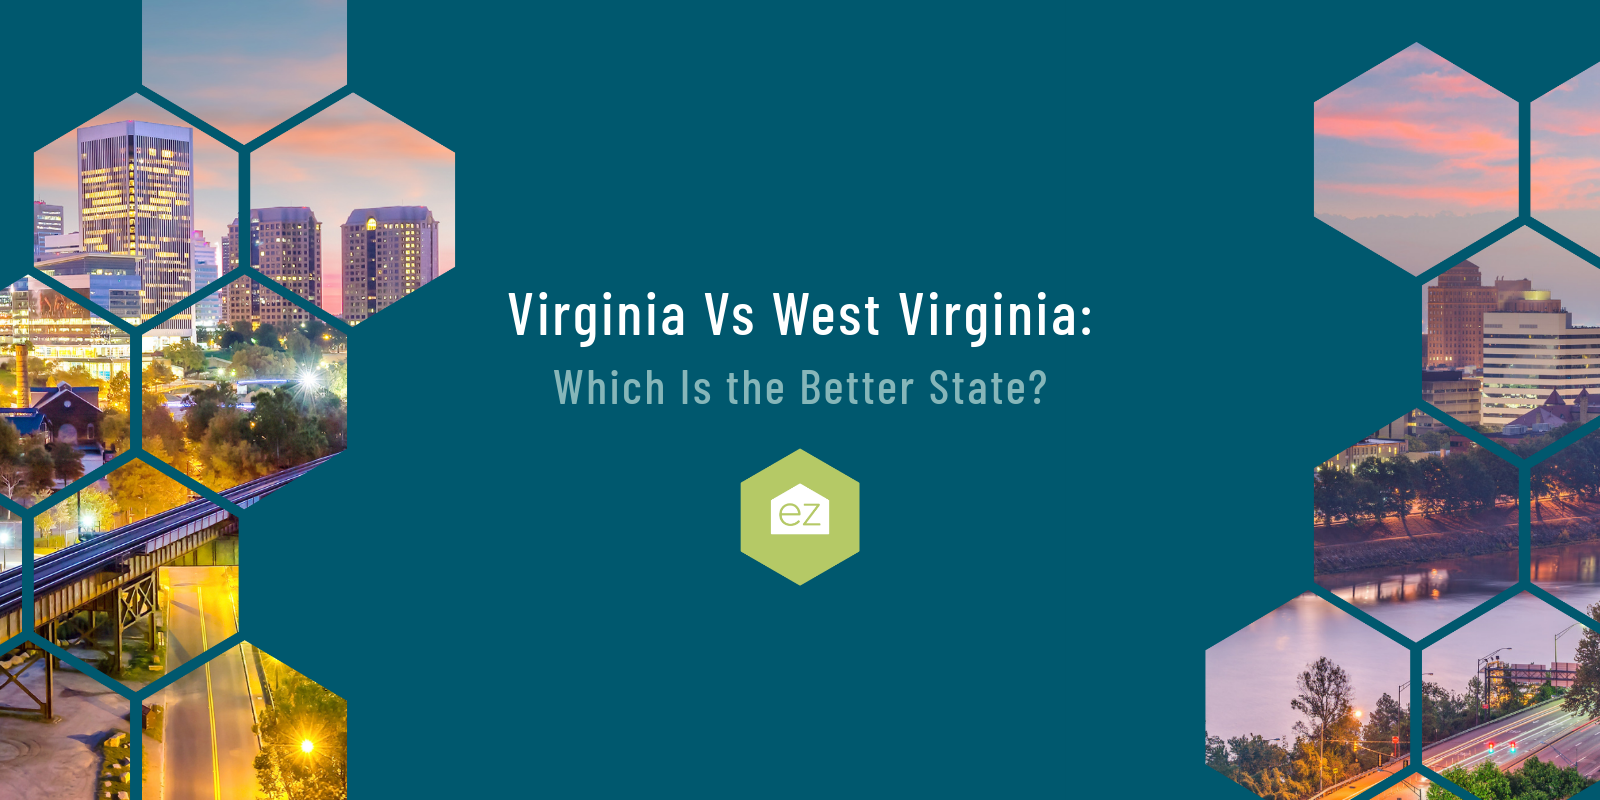 Virginia and West Virginia United States